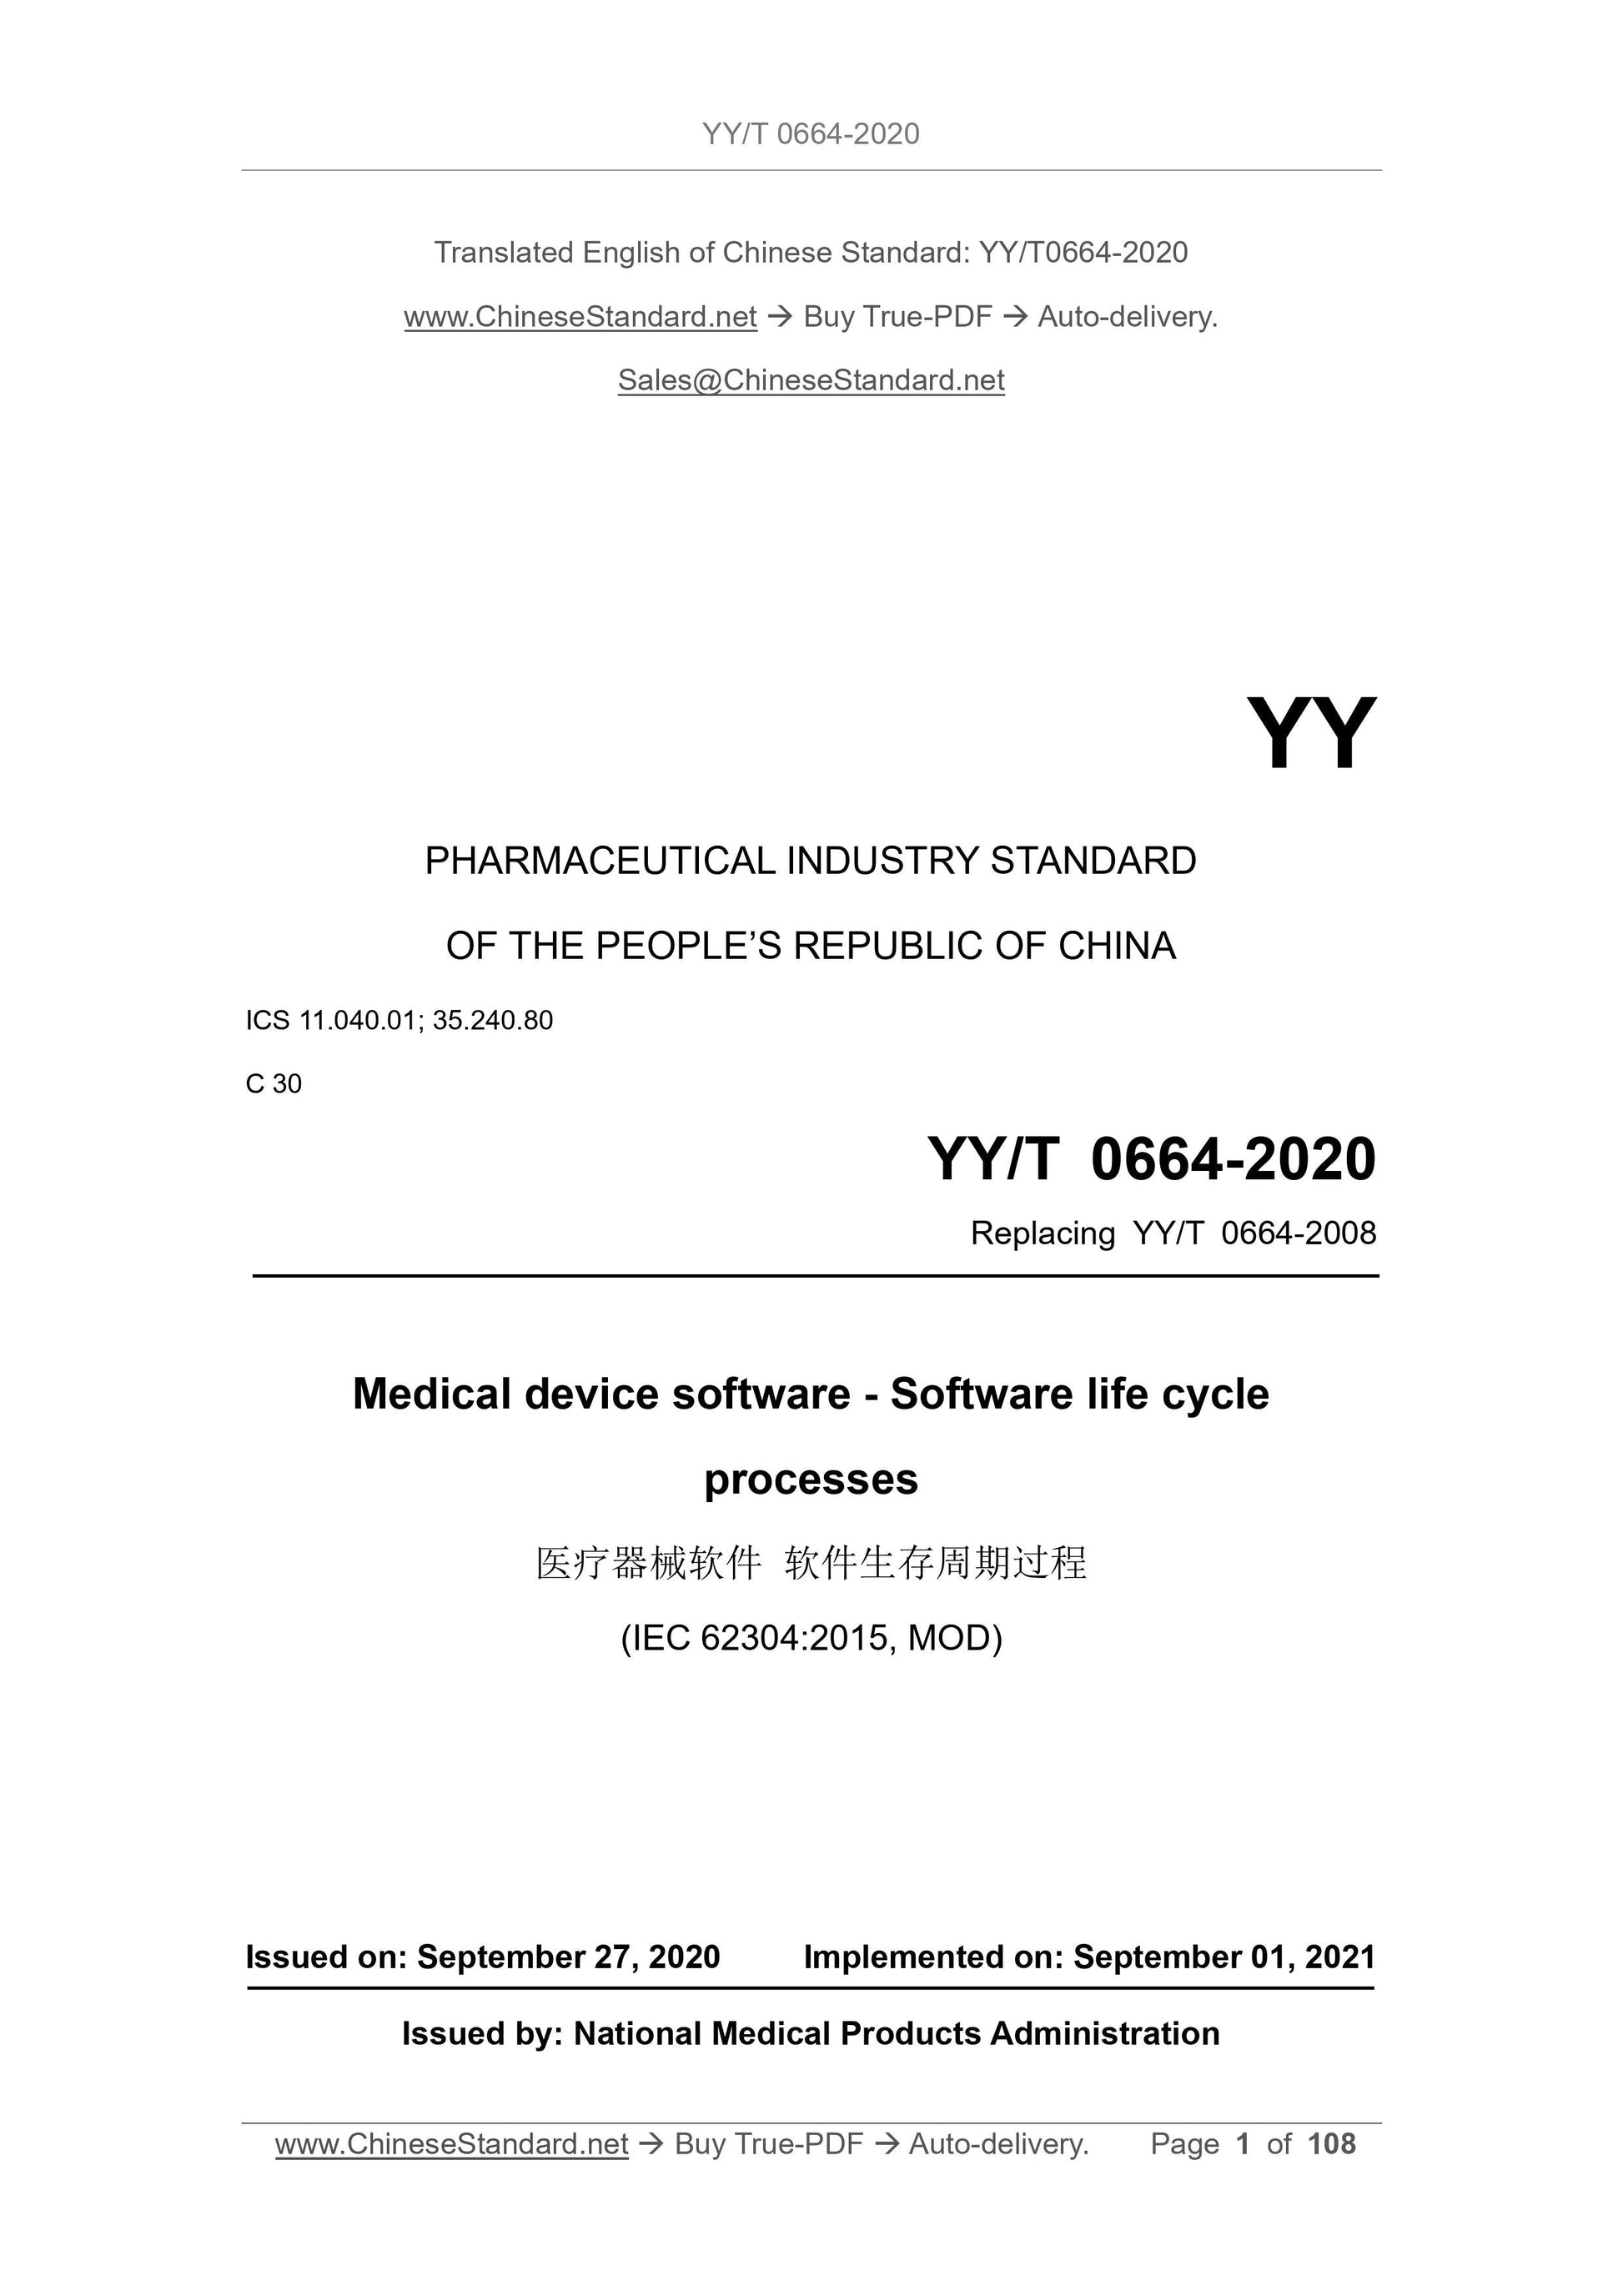 YY/T 0664-2020 Page 1